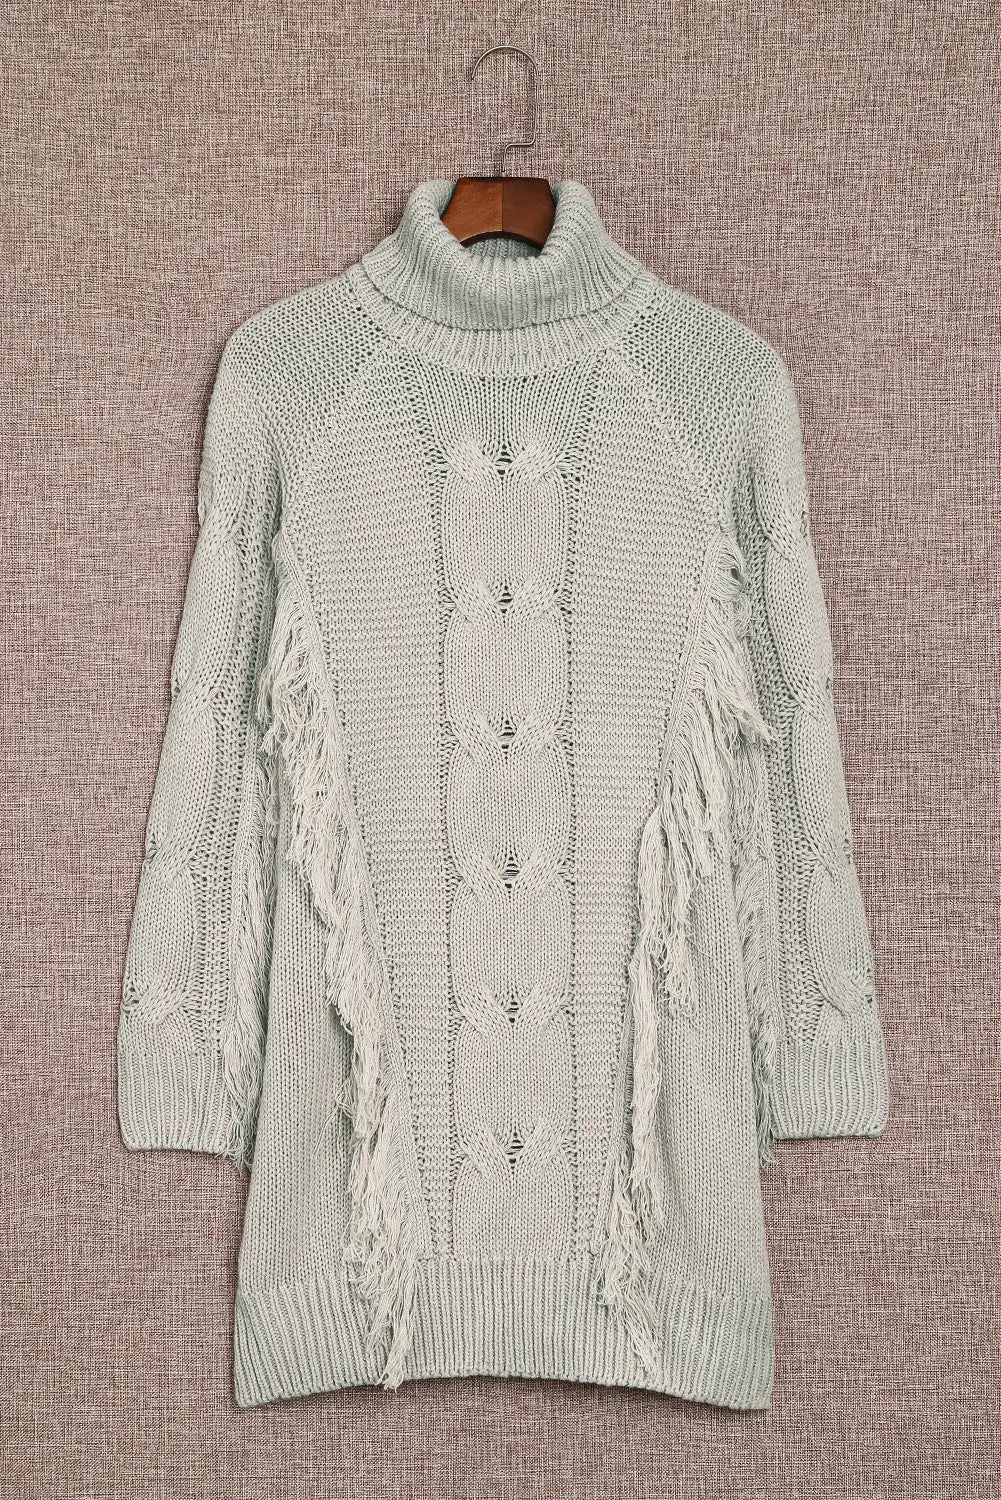 Gray twist fringe casual high neck sweater dress - dresses